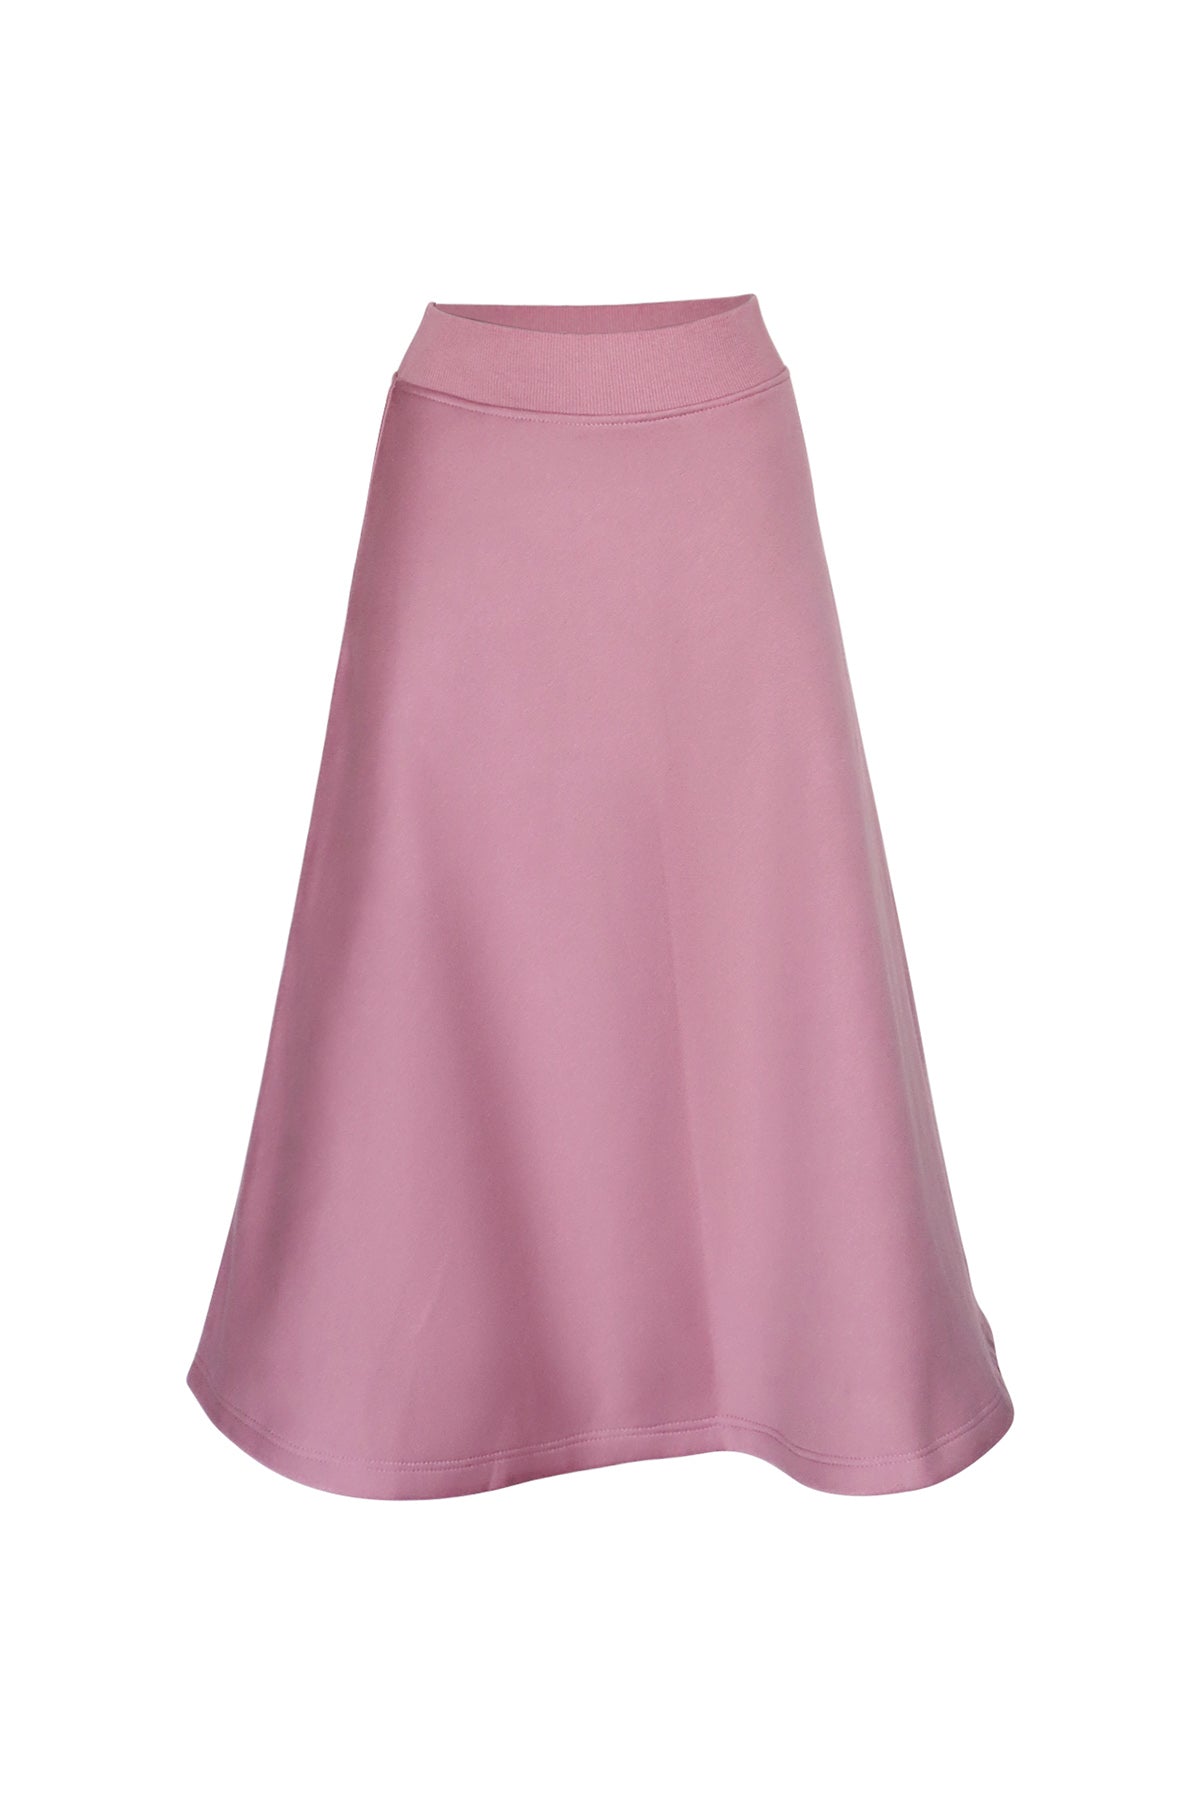 Palette Cotton Skirt